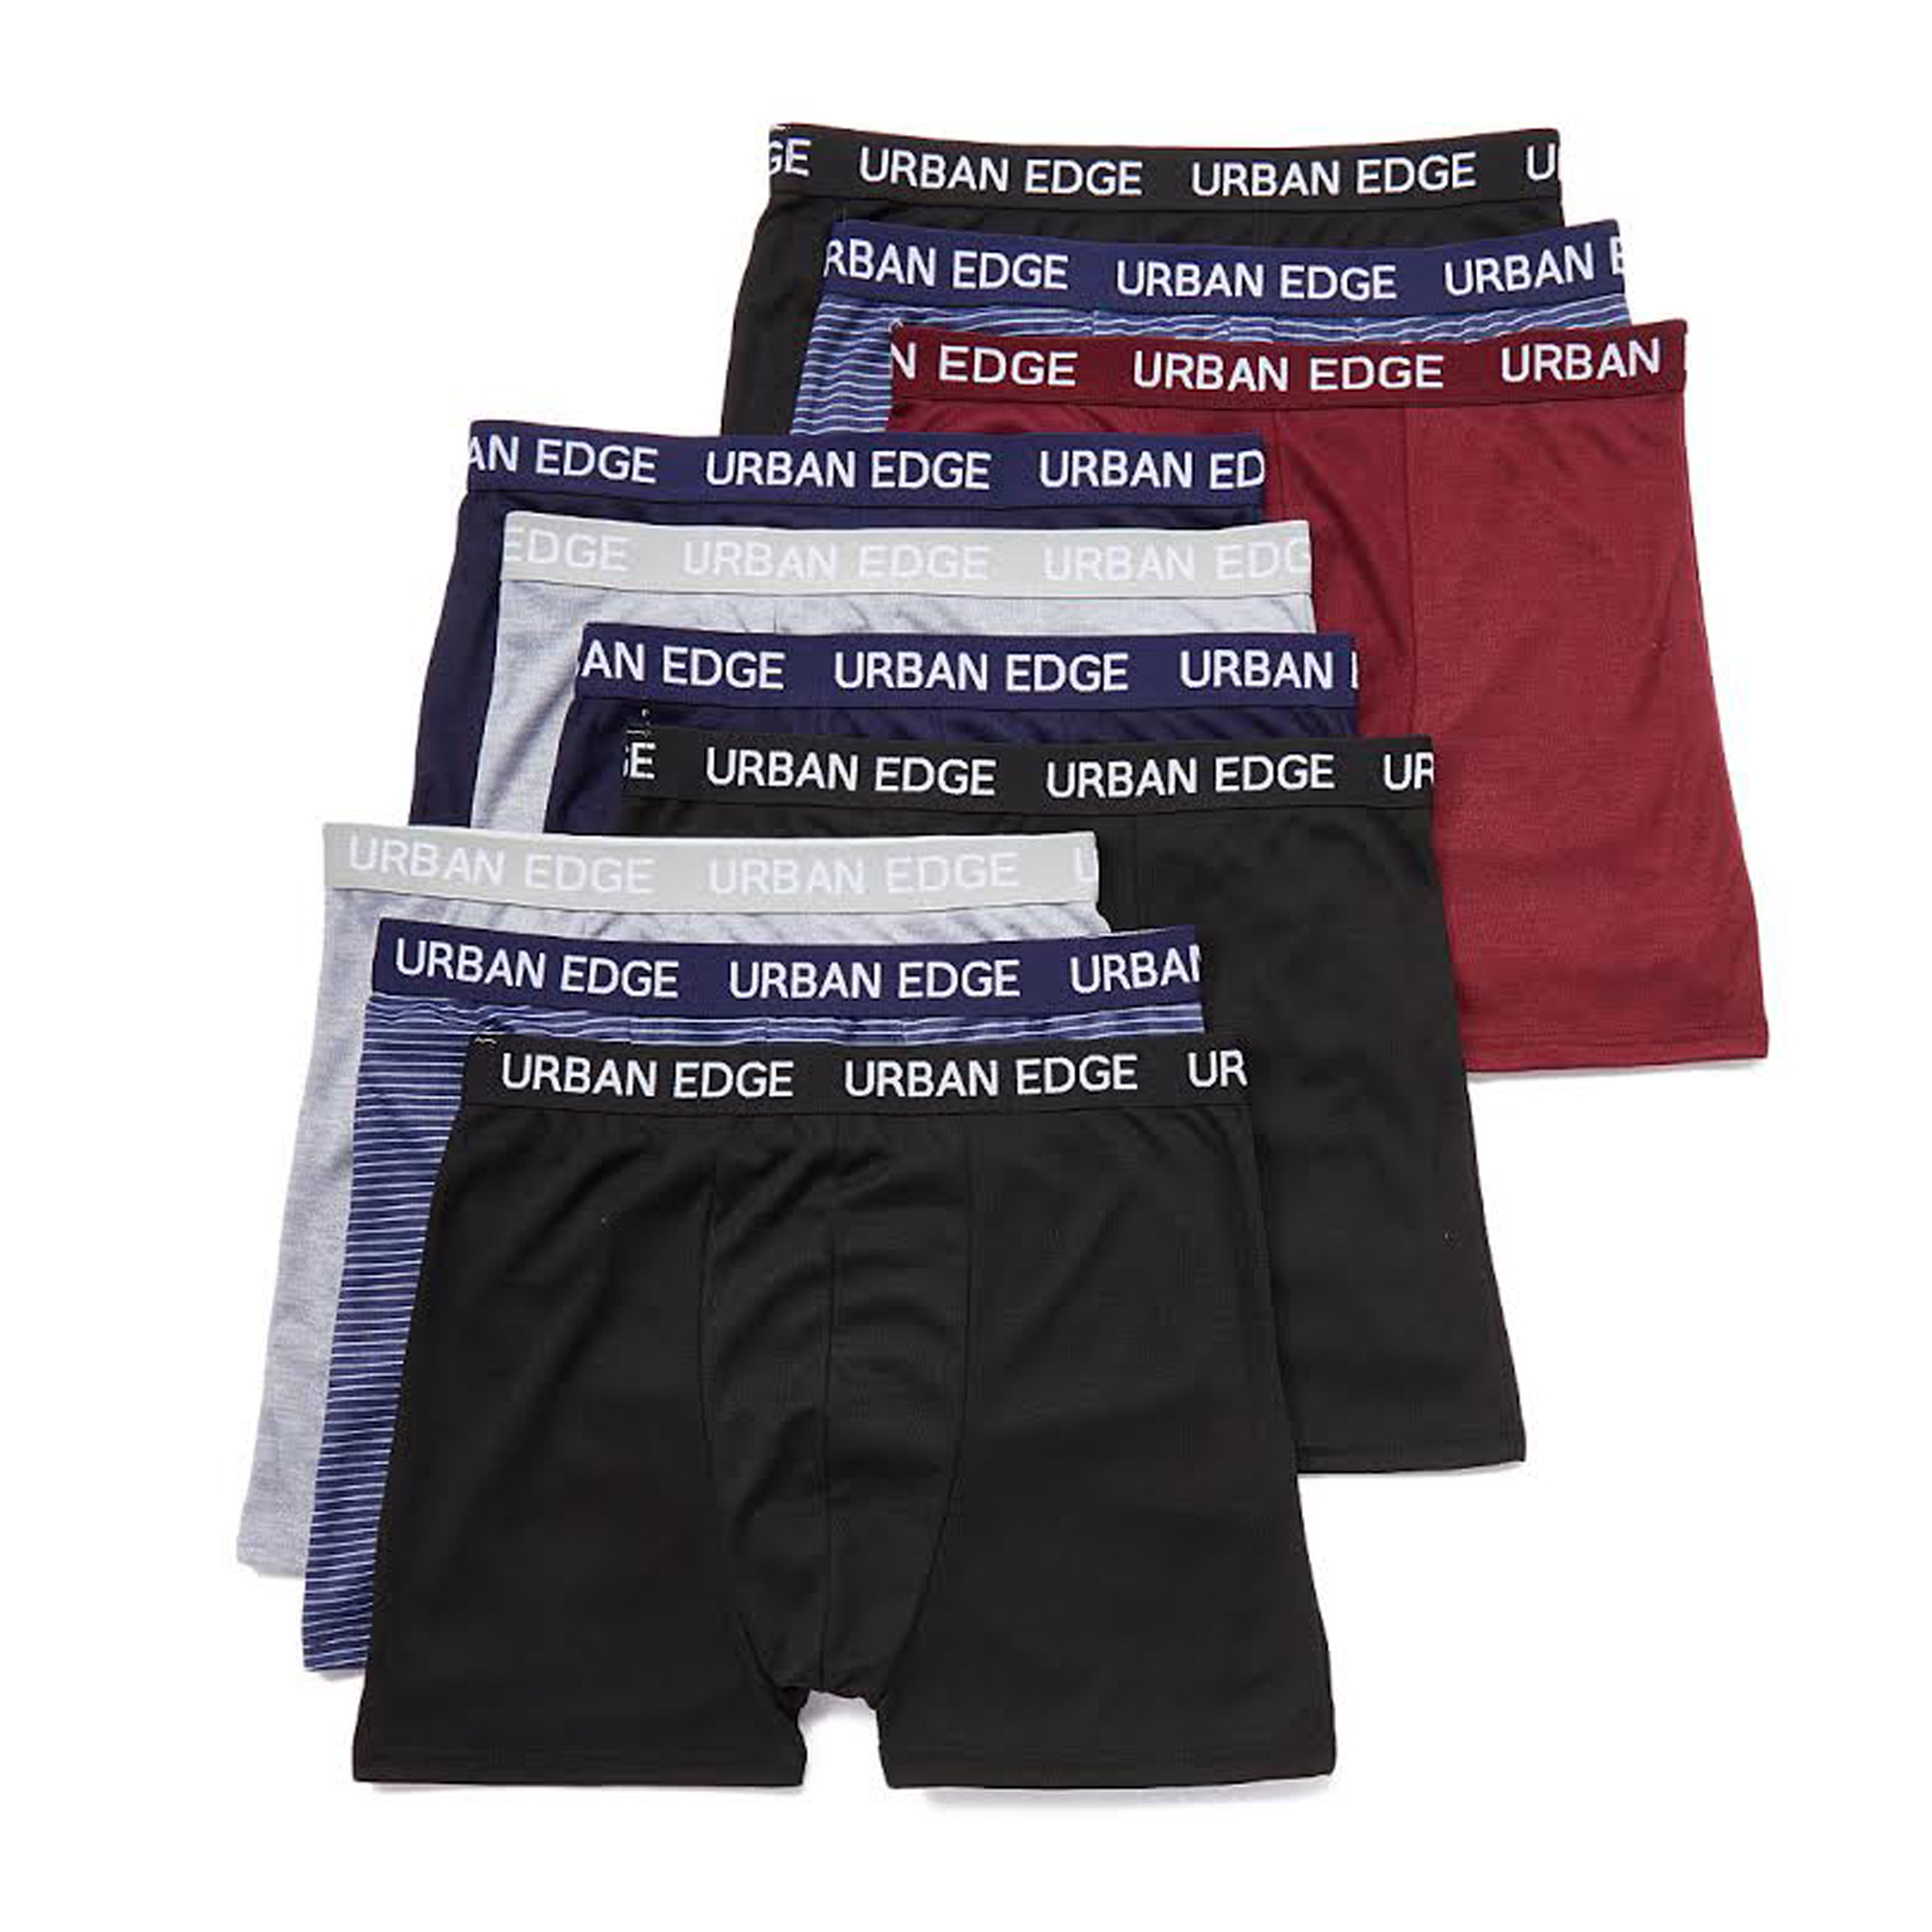 Wholesale Men's Underwear | Eros Wholesale | eroswholesale.com